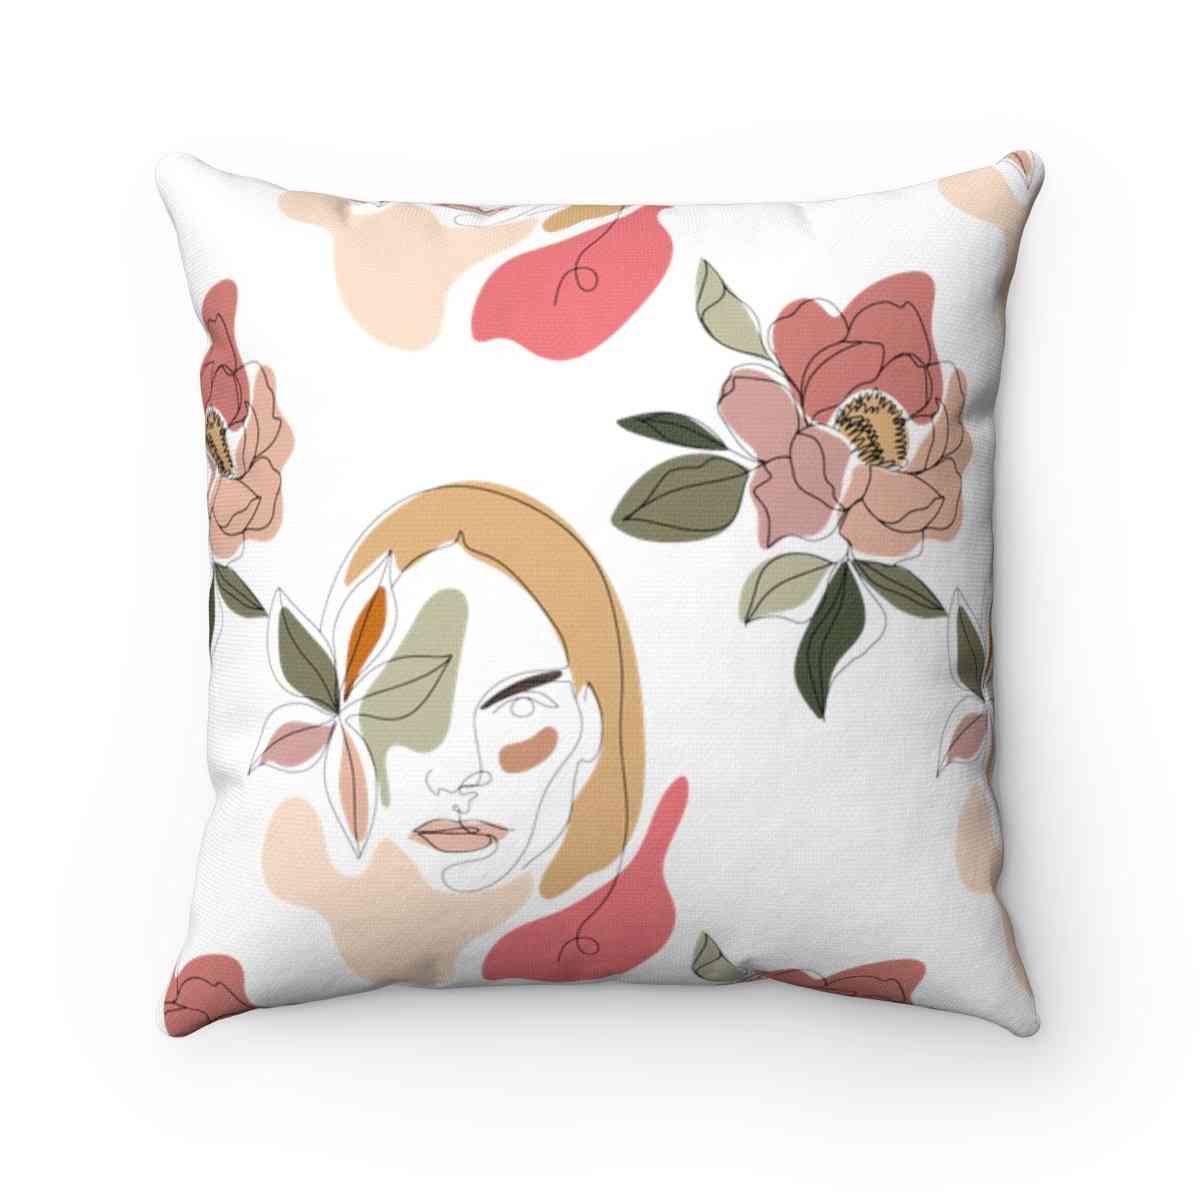 Stoic Woman Square Pillow